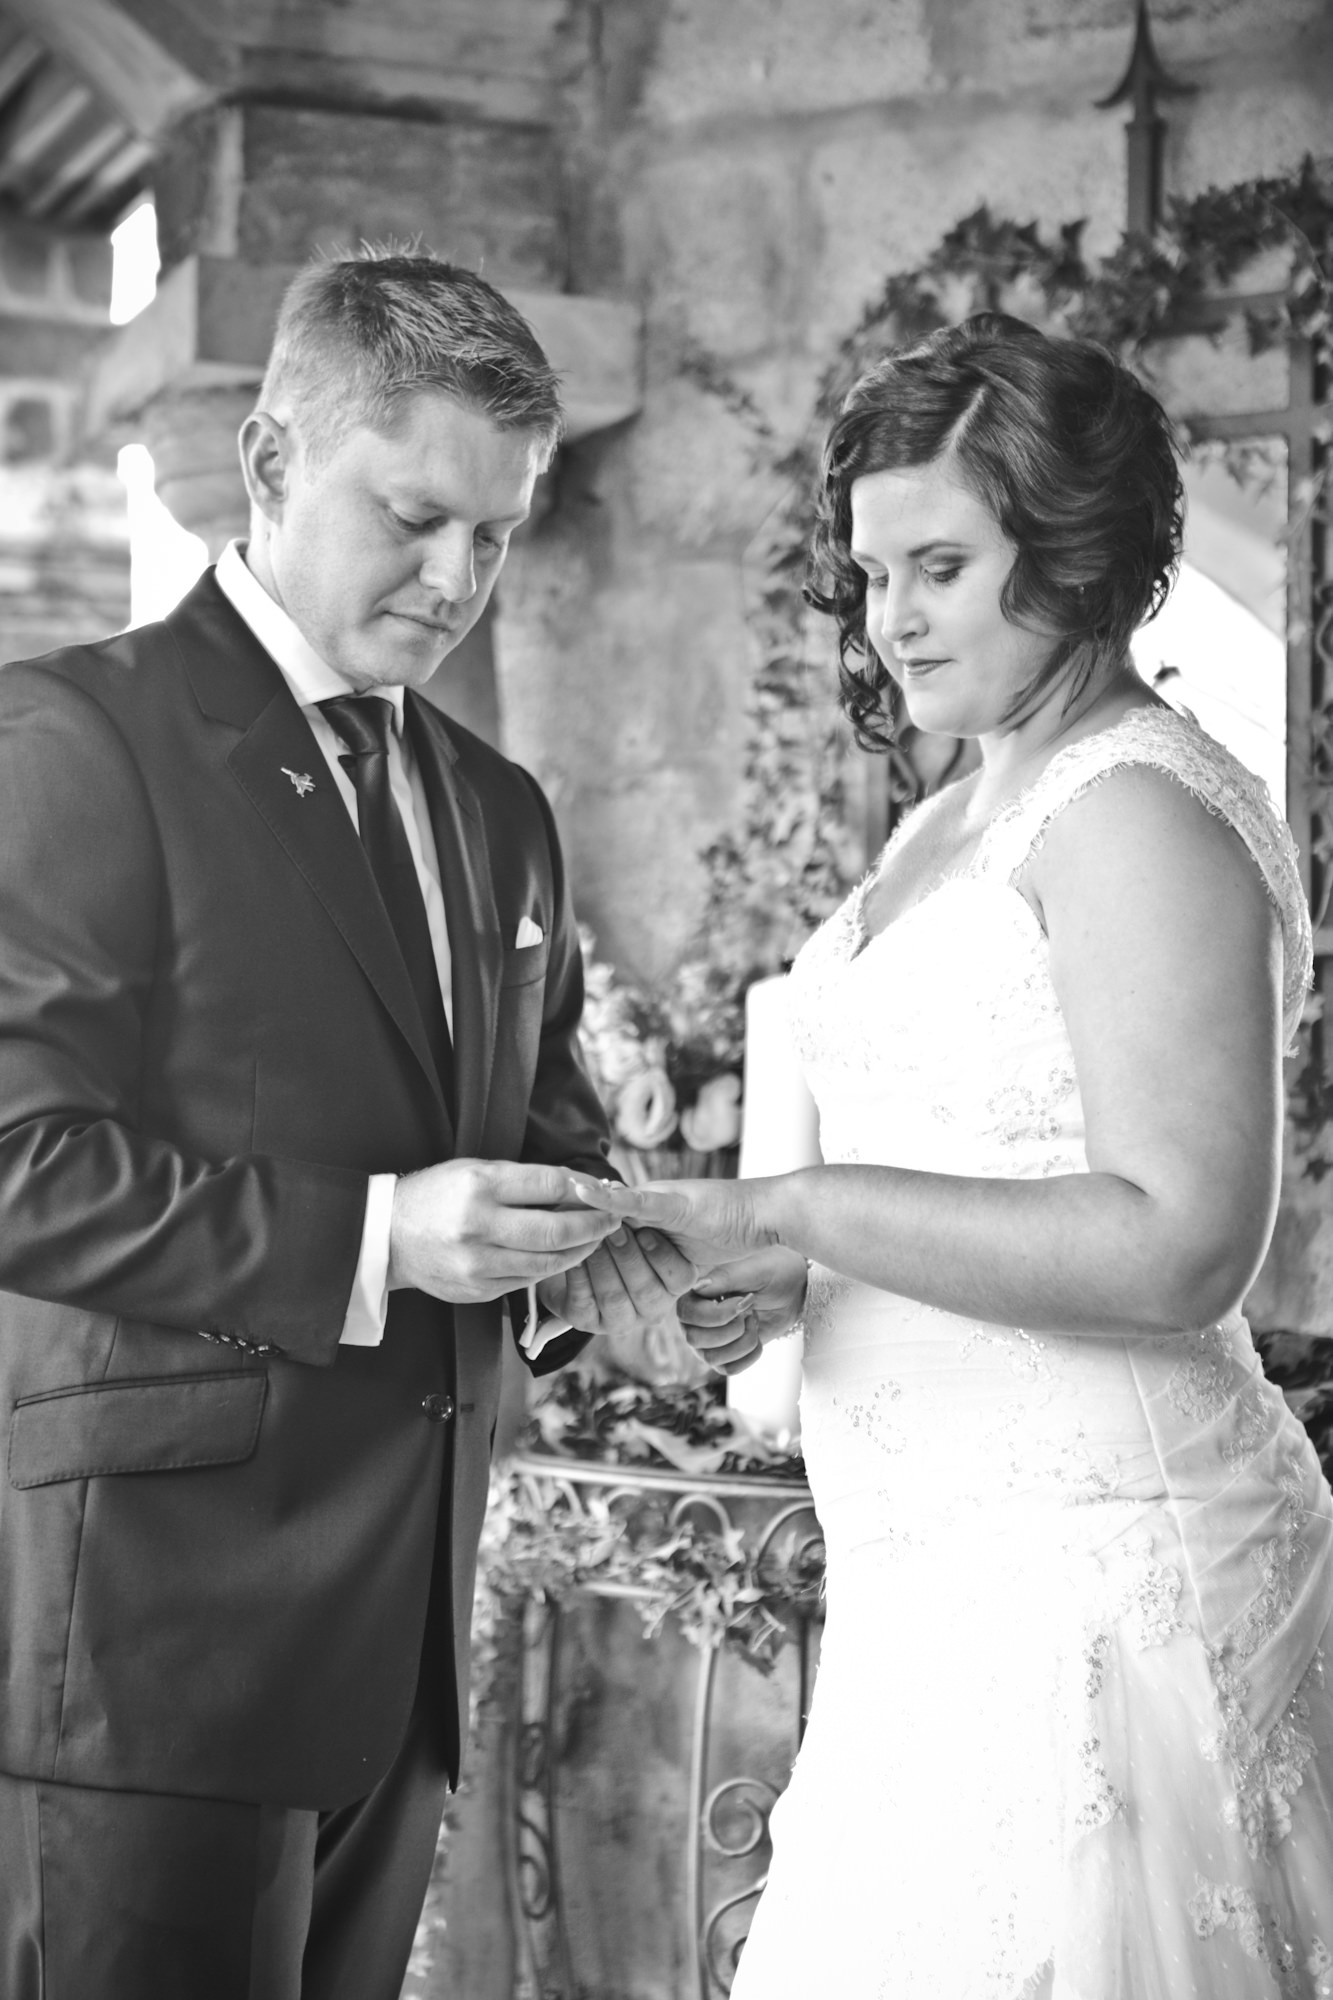 Wedding at Bygracealone - Wedding photographer George (52)